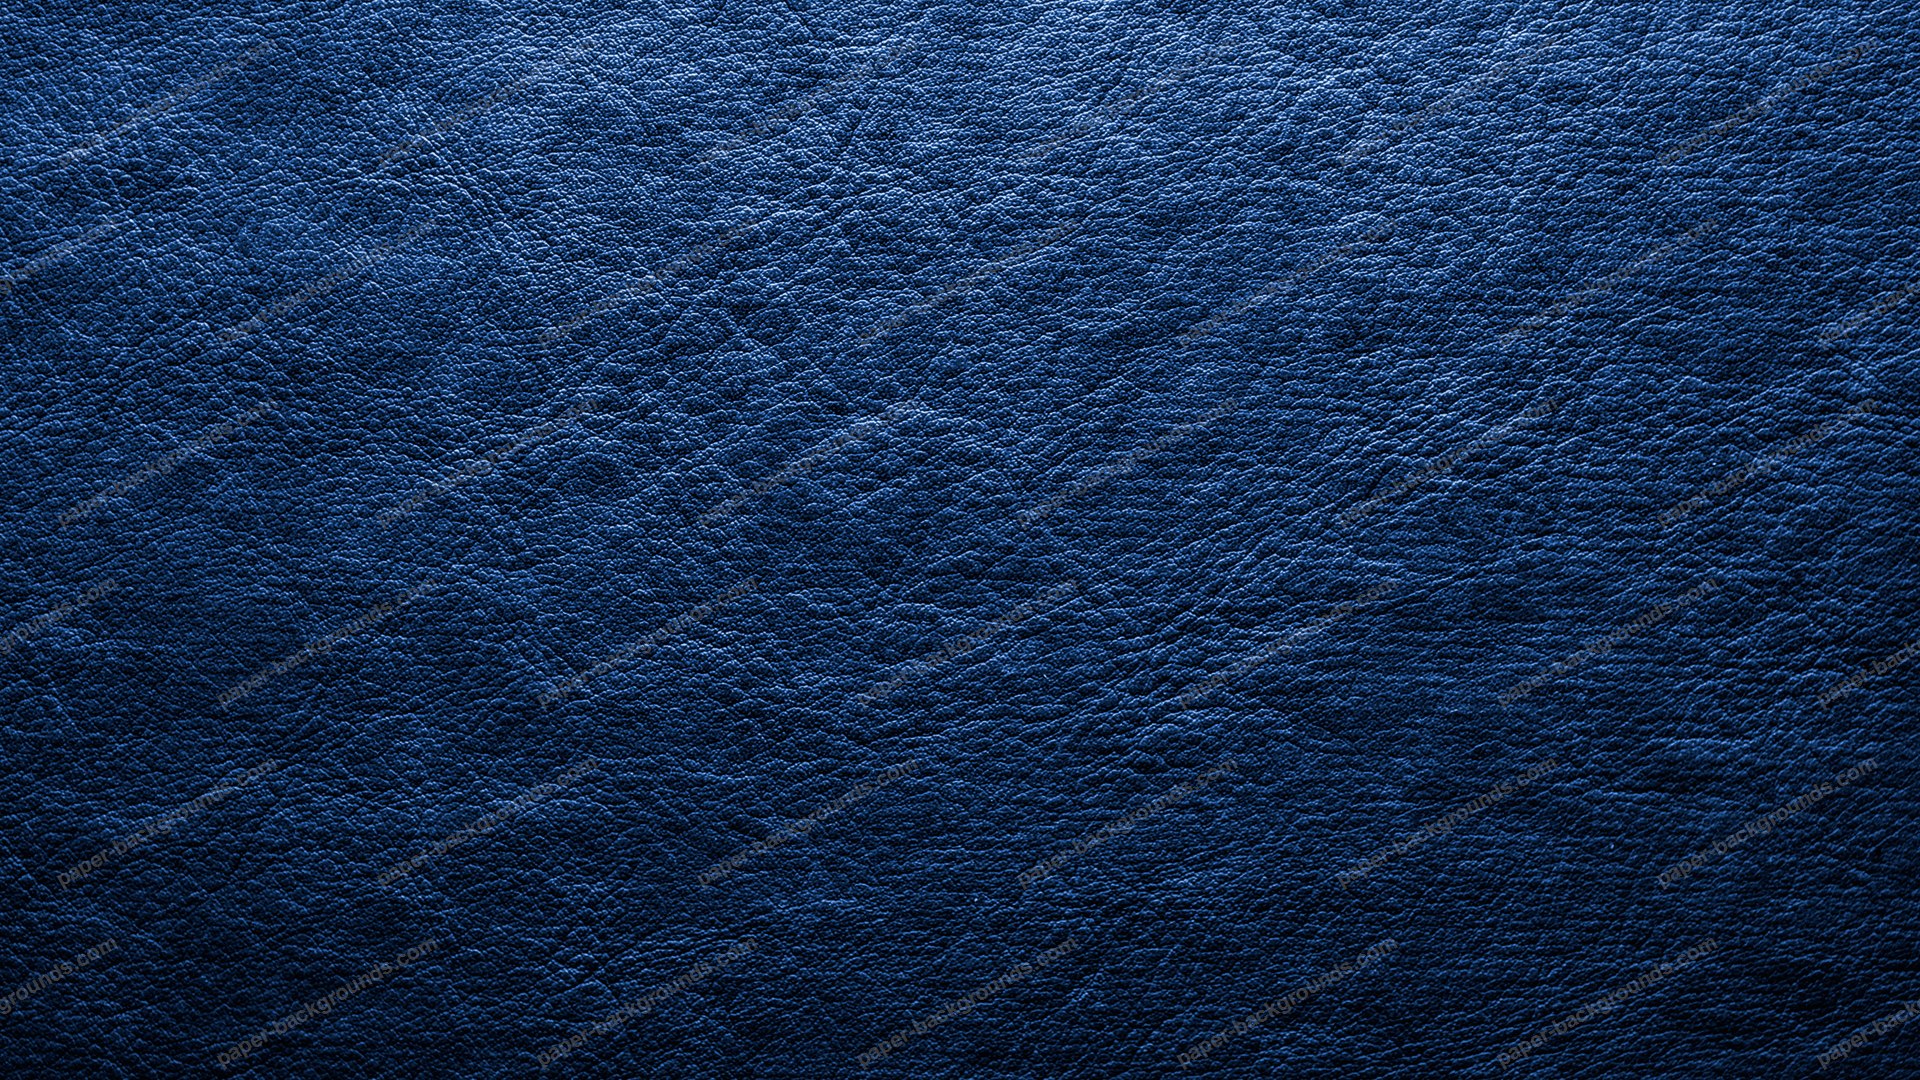 Free download Dark Blue Leather Background HD 1920 x 1080p ...